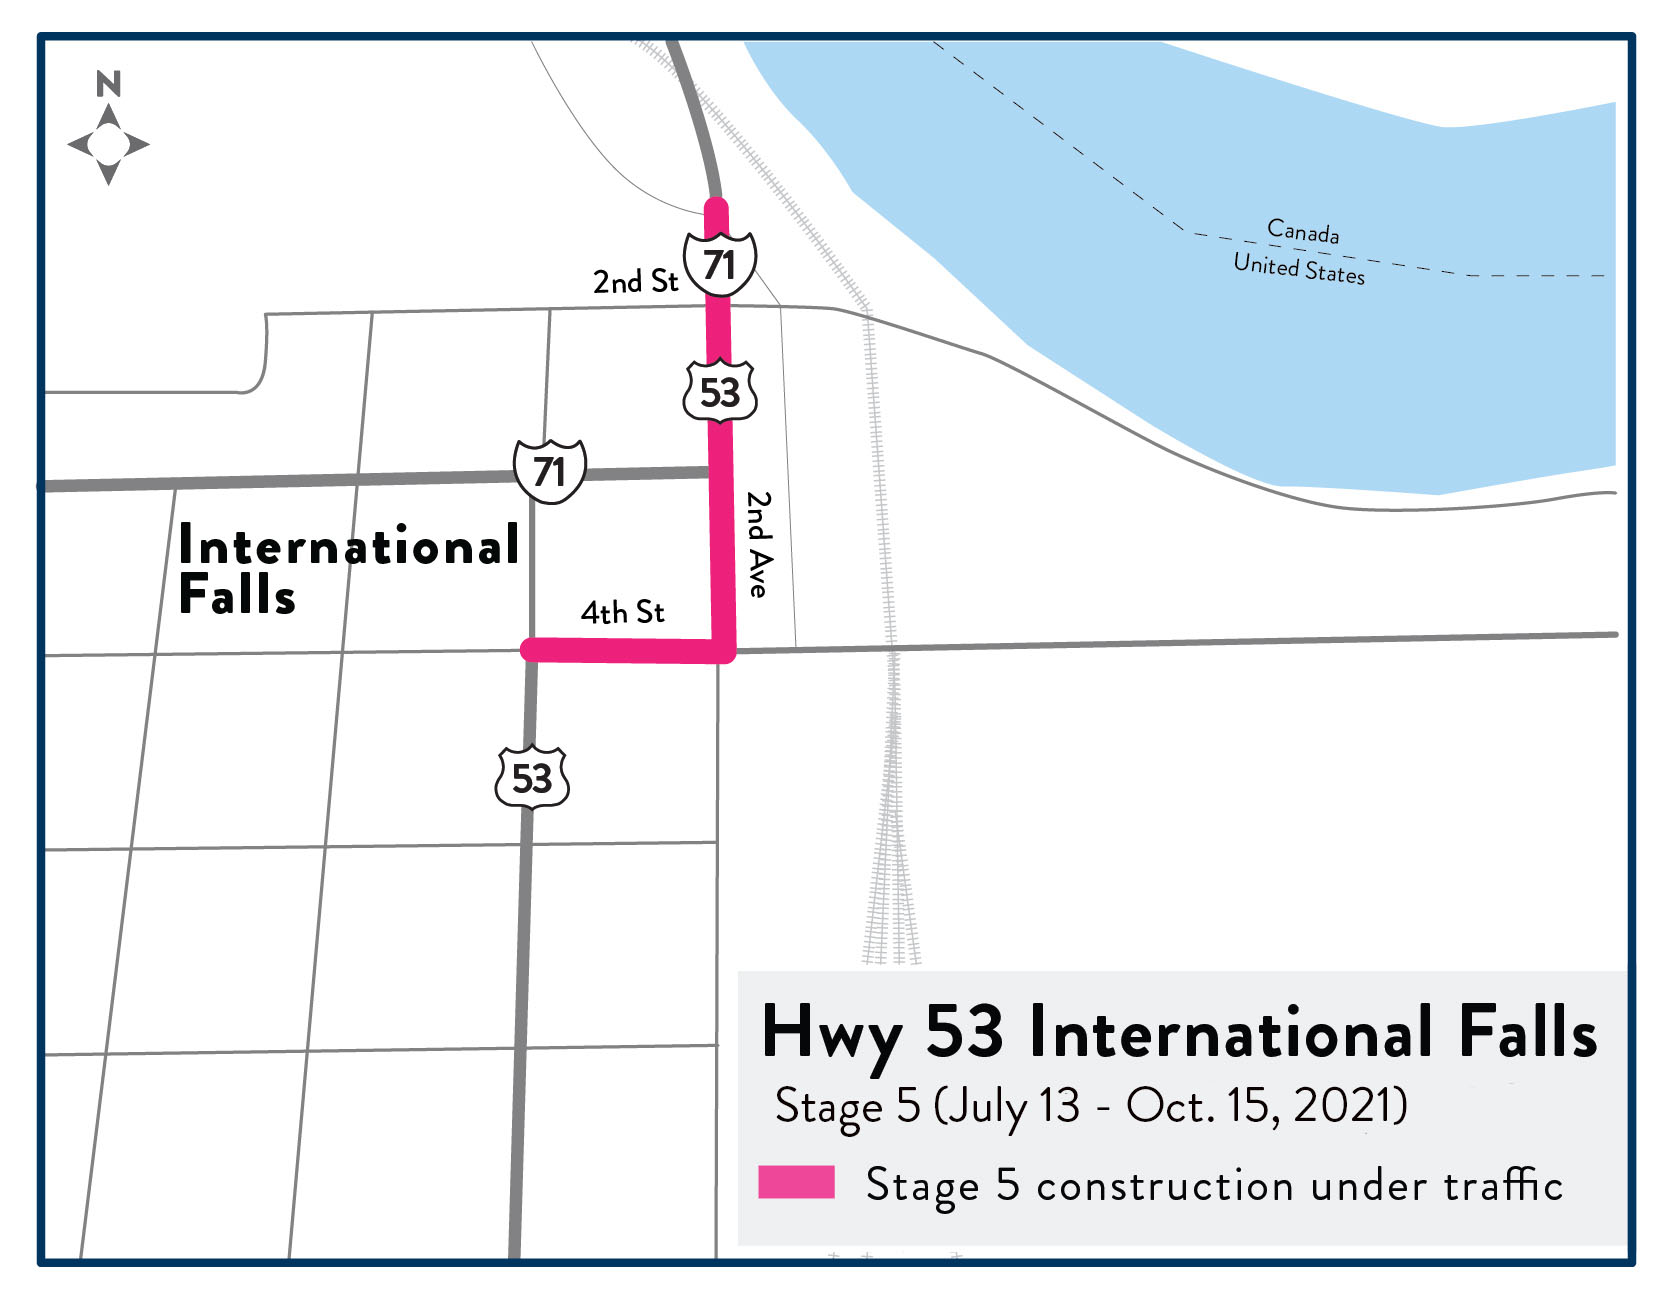 International Falls stage 5 detour map.